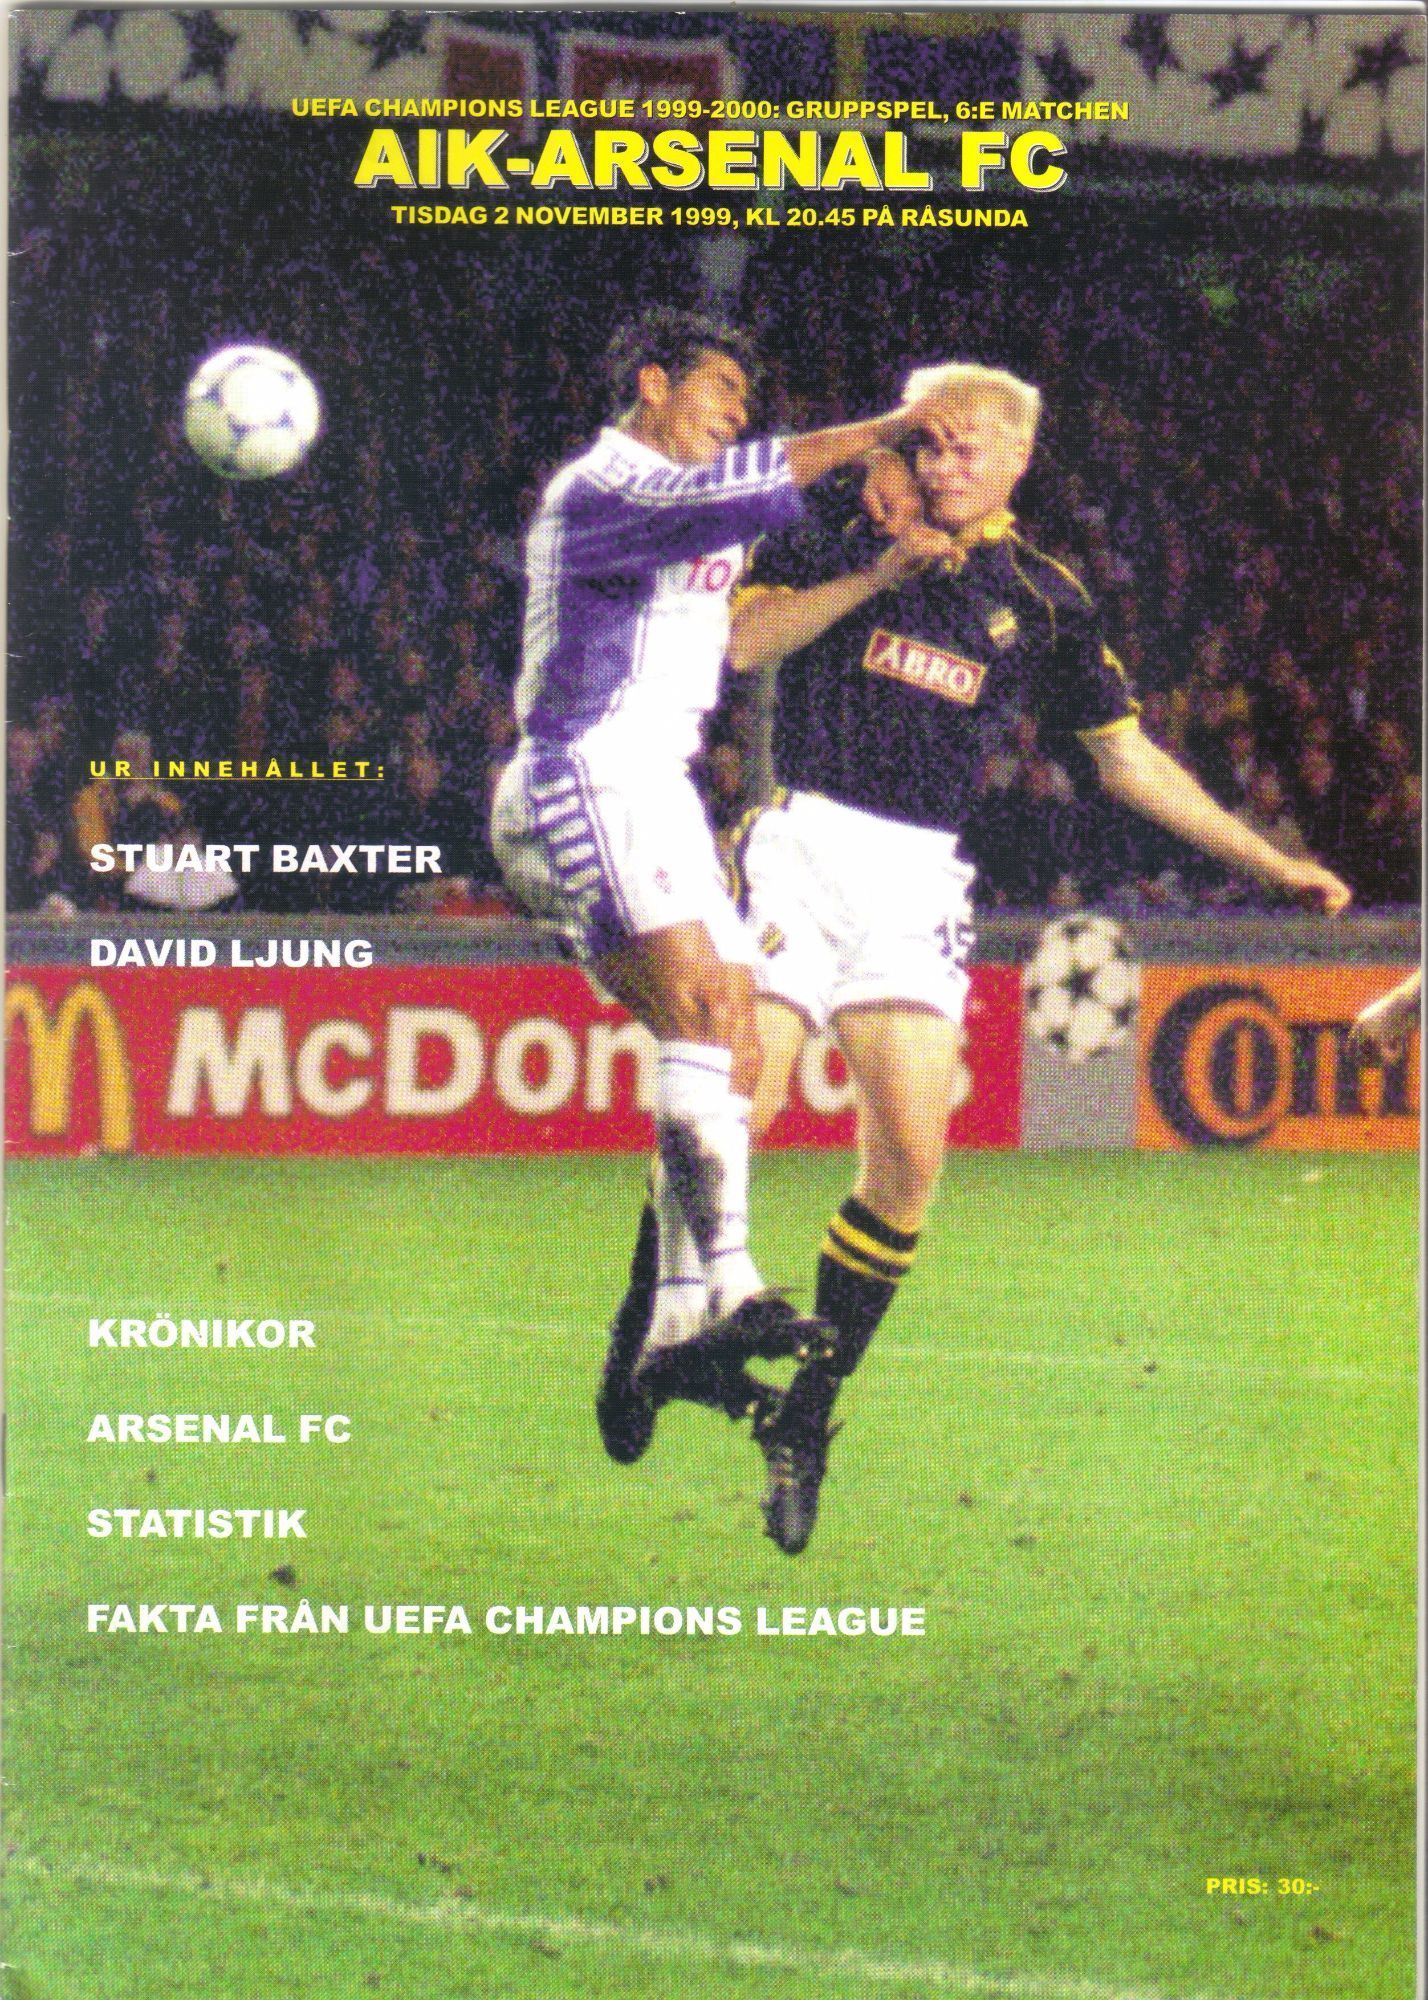 Tuesday 2 November 1999, kl 20:45  AIK - Arsenal FC 2-3 (1-1)  Råsunda Fotbollstadion, Solna